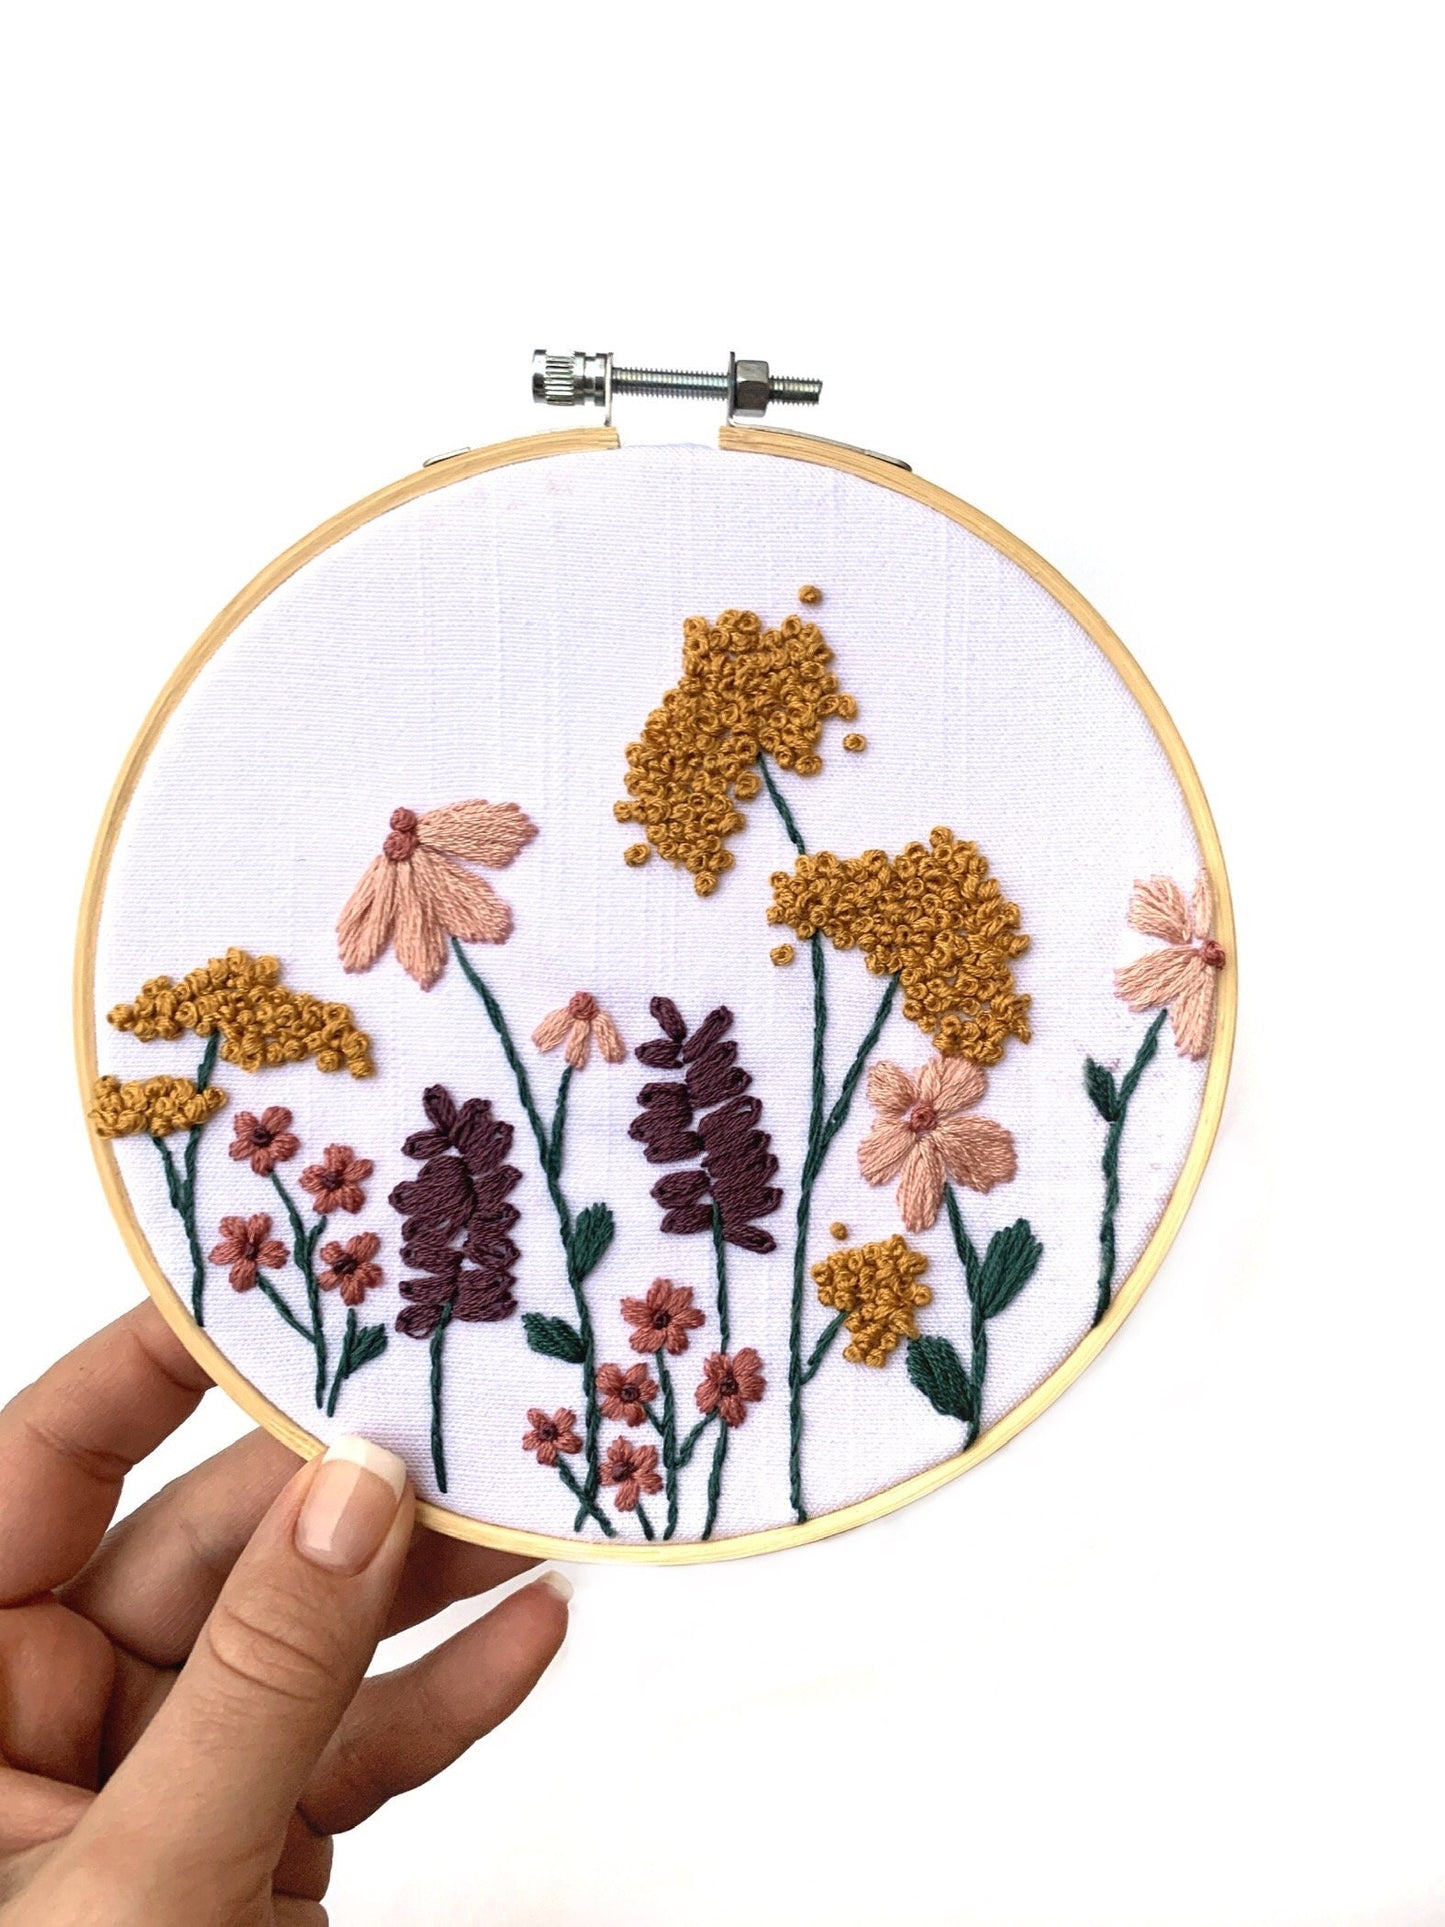 Grandma's Garden PDF Embroidery Pattern